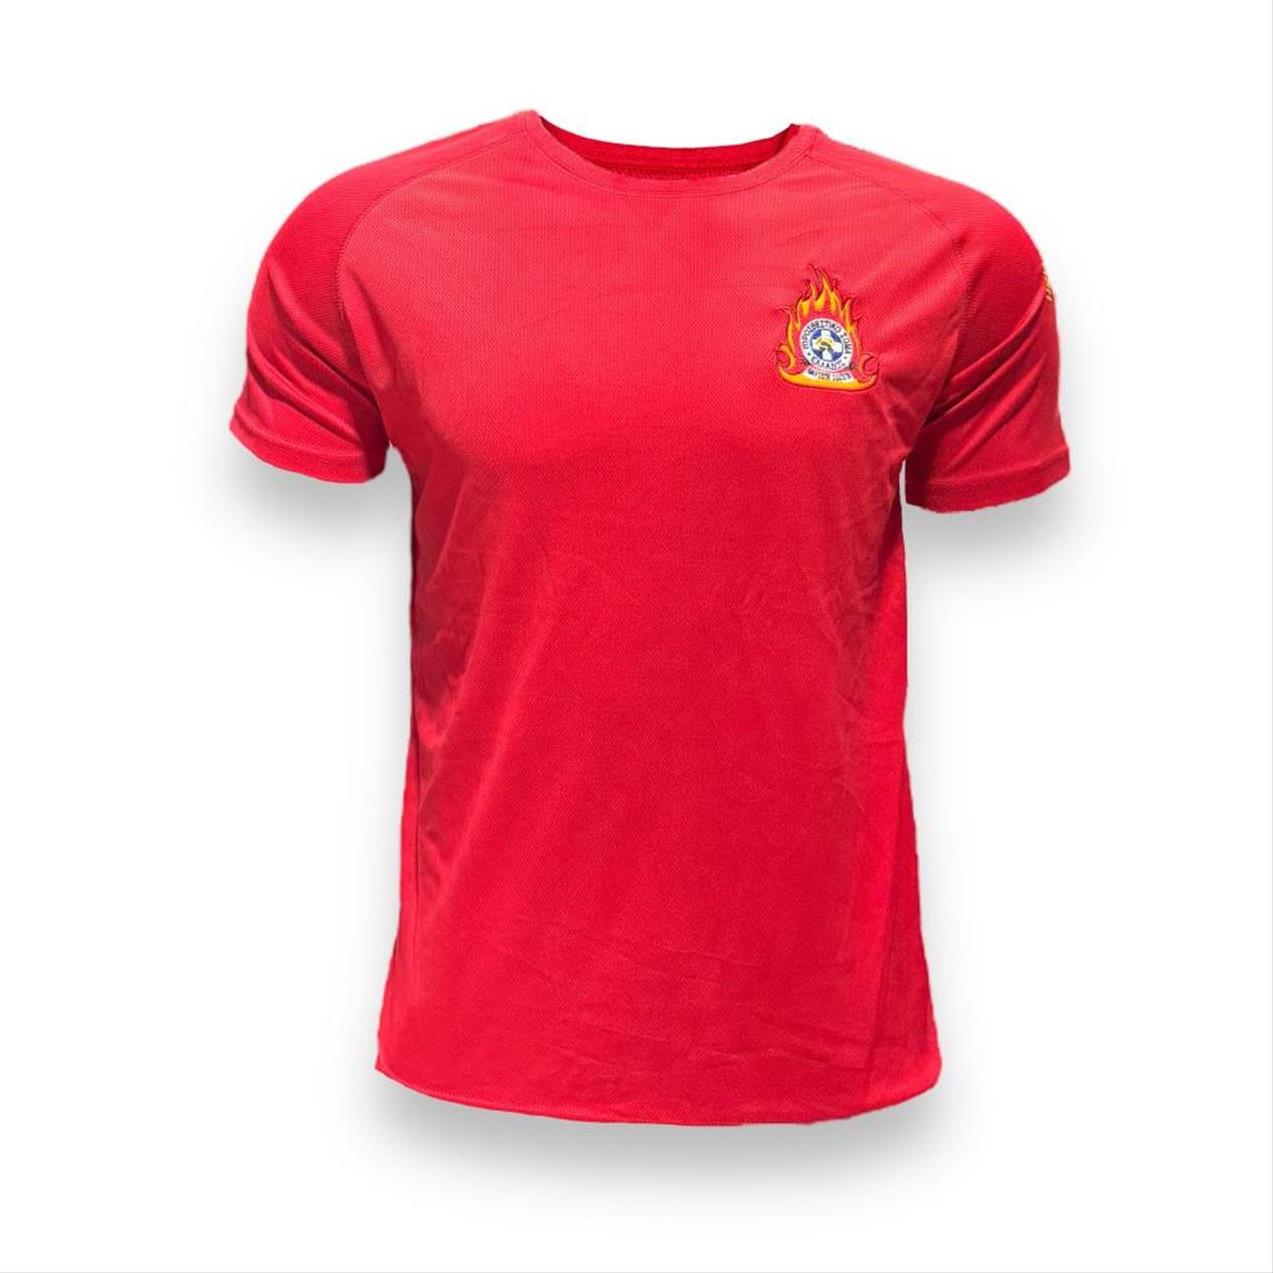 mployza-T-Shirt-pyrosvestiko-soma-Quick-Dry-Red--Greek-Forces